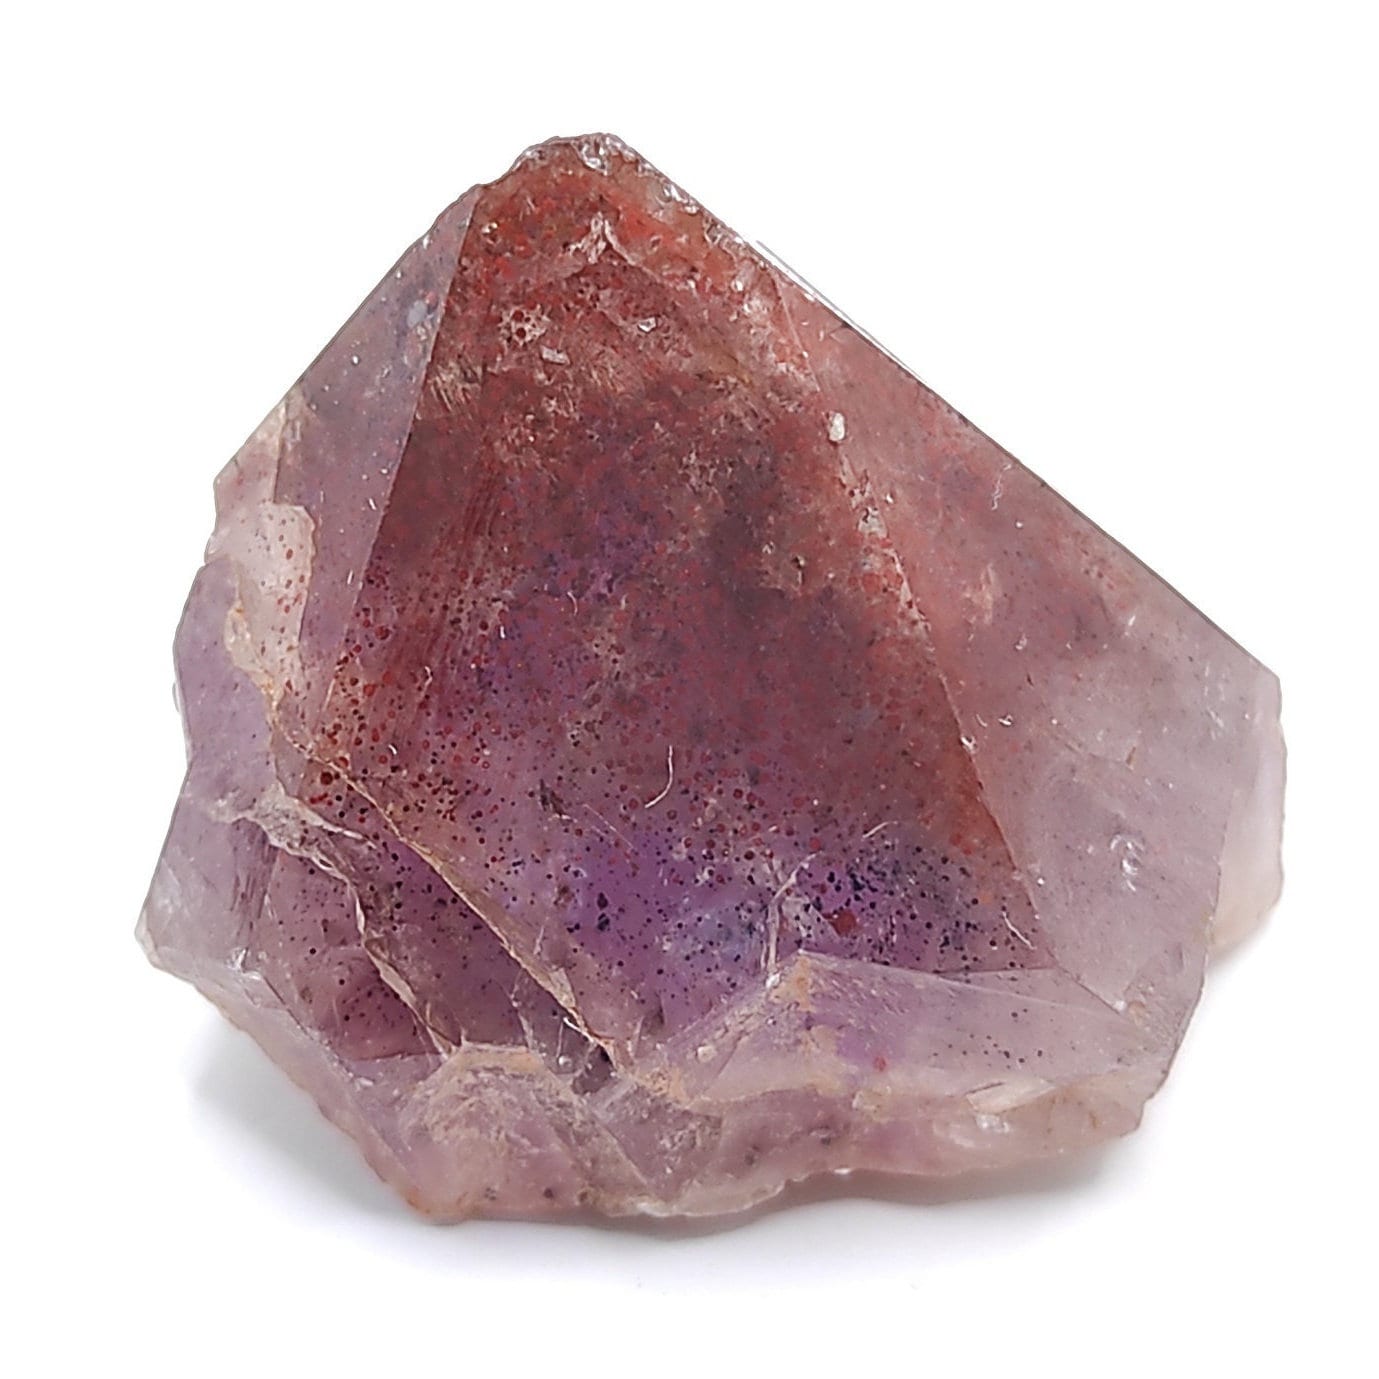 9g Mini Thunder Bay Amethyst - Hematite Amethyst - Canadian Amethyst Crystal - Hematite Included - Mini Small Pocket Crystals